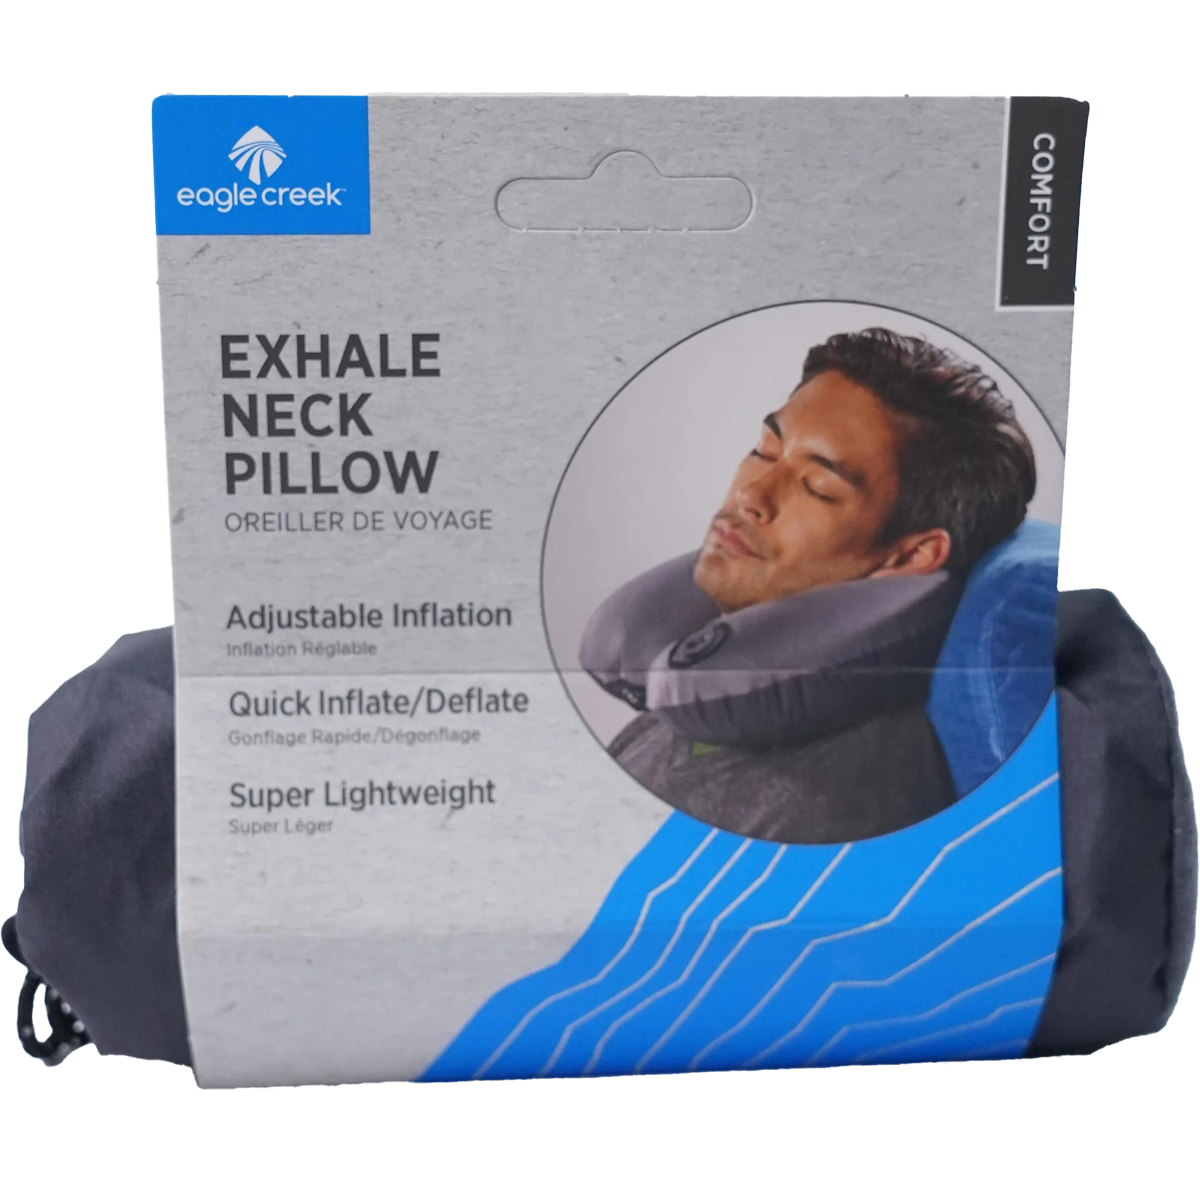 Exhale Neck Pillow alternate view